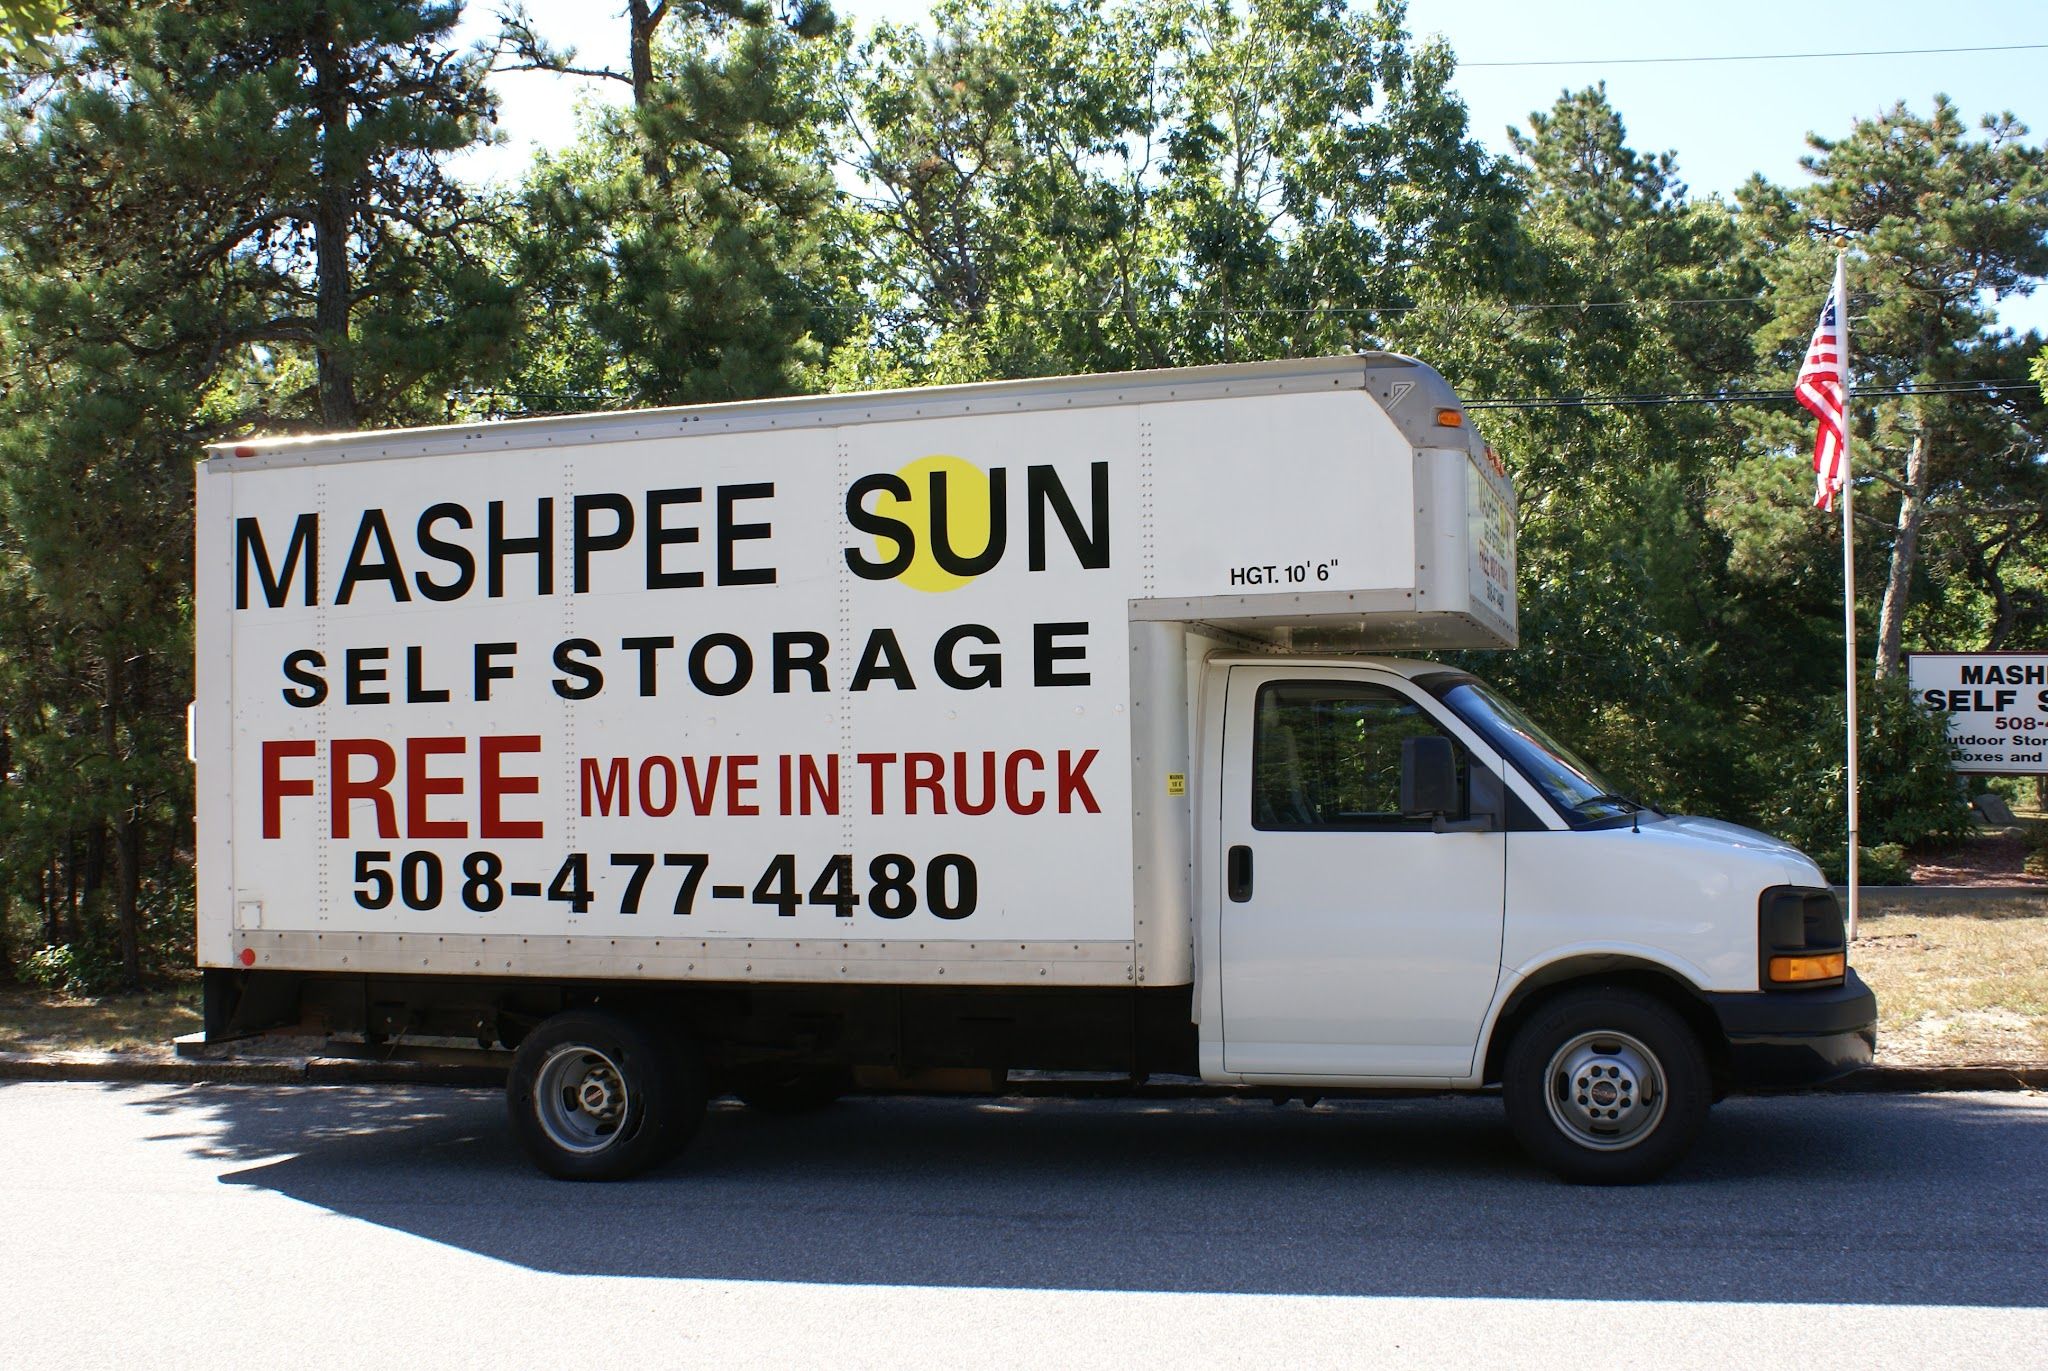 Services & Products Mashpee Sun Self Storage in Mashpee MA